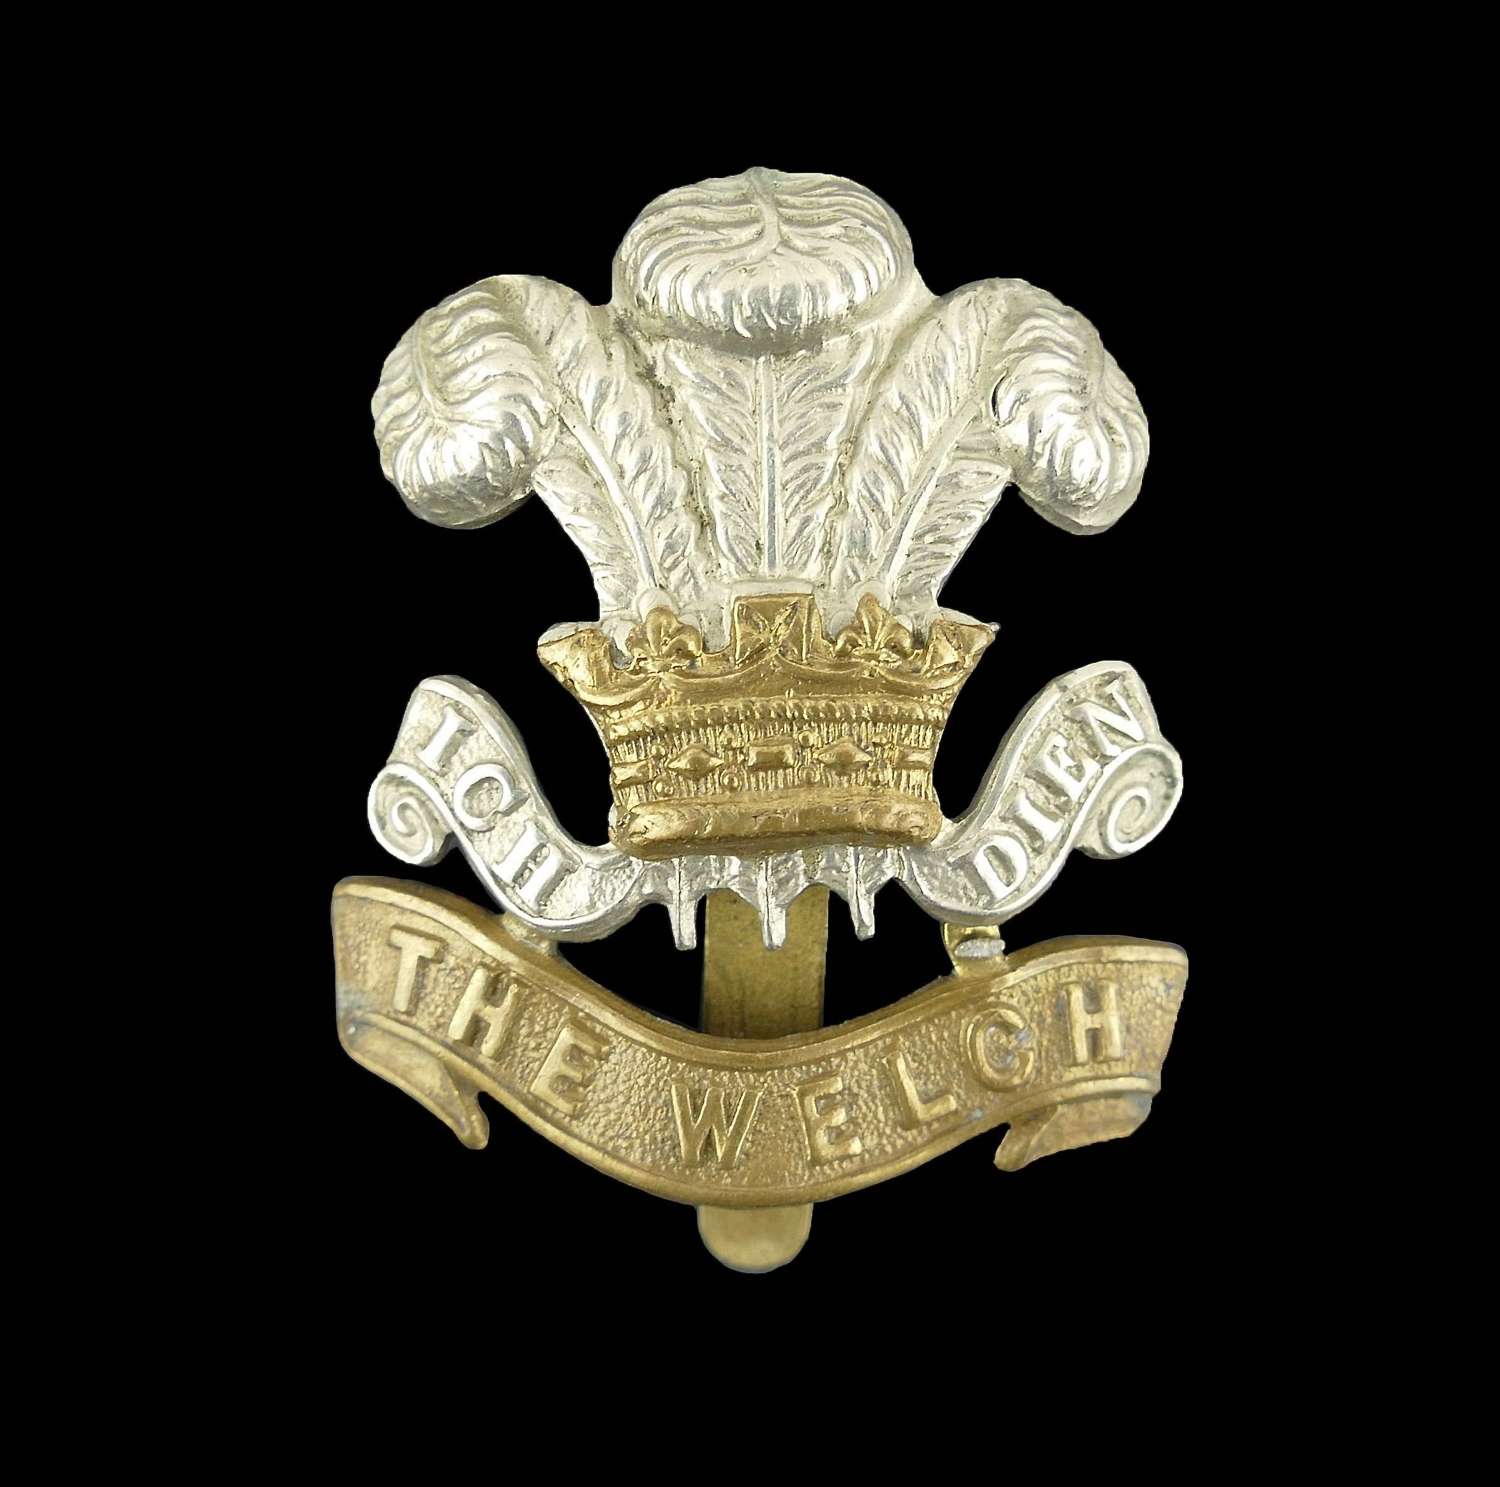 The Welch Regiment cap badge